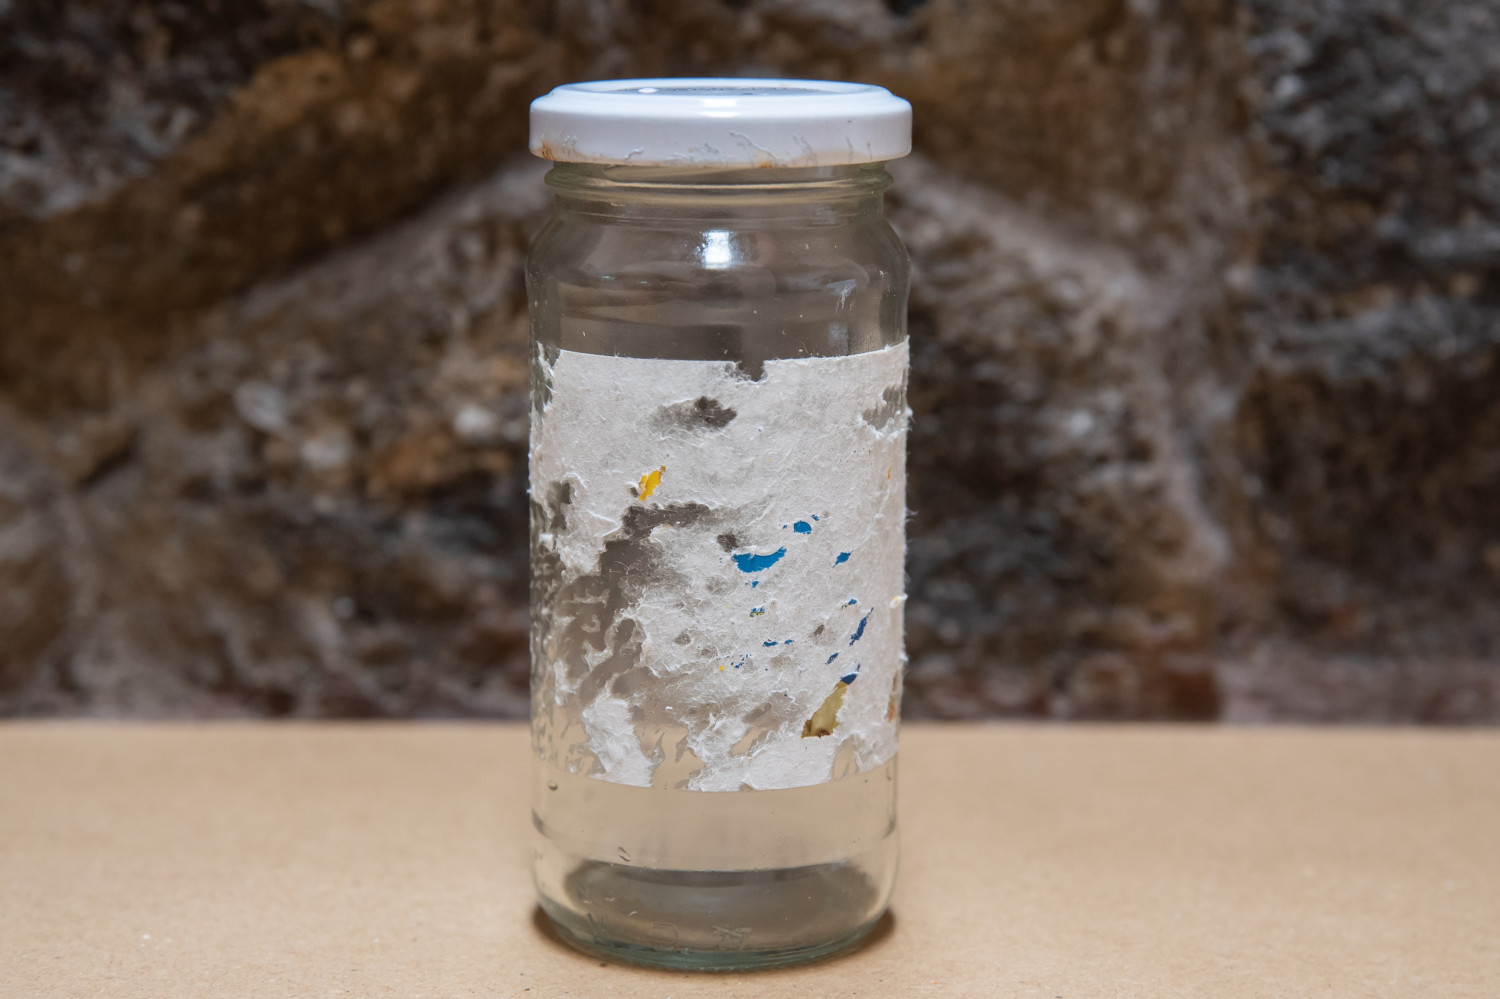 Sticker residue left on glass jar